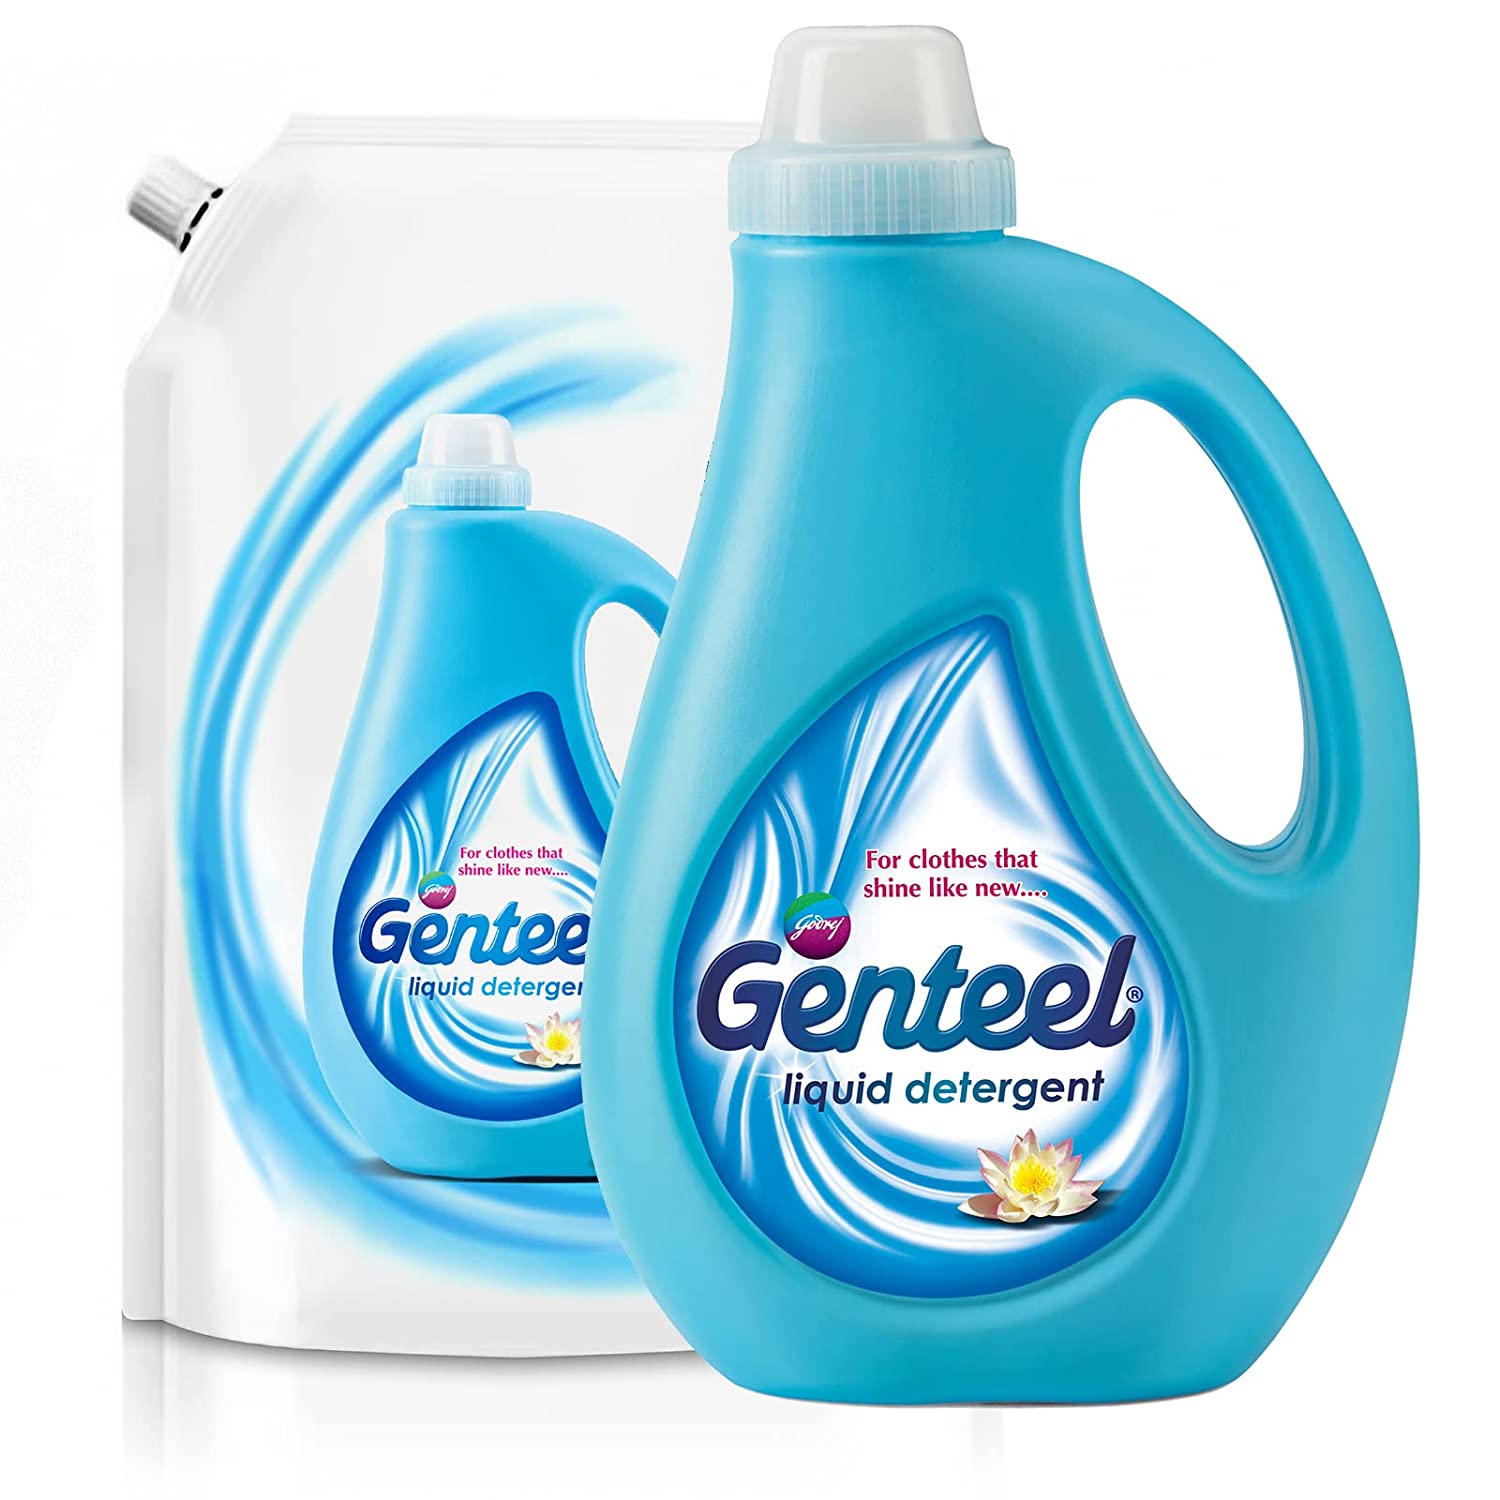 Godrej Genteel Liquid Detergent (1+1)